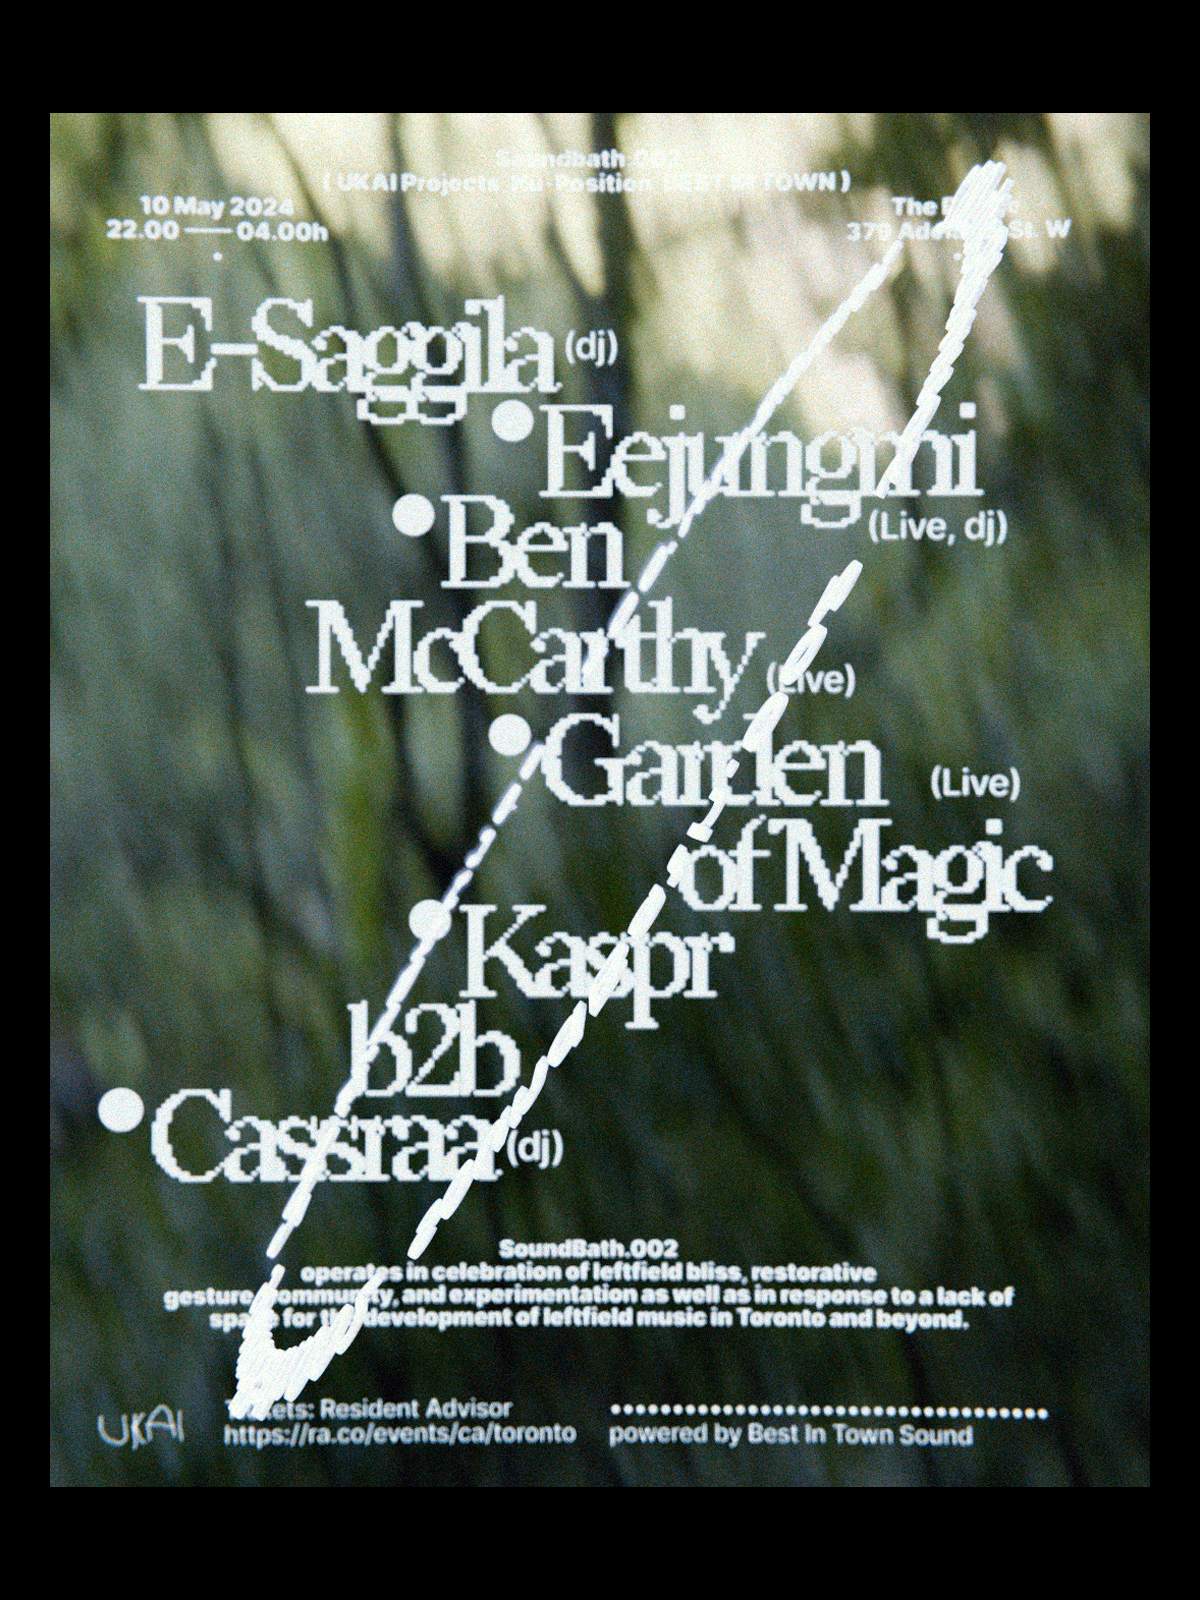 SoundBath.002 - E-Saggila, EEJUNGMI, Garden of Magic, Ben McCarthy, Kaspr b2b CASSRAA - Página frontal